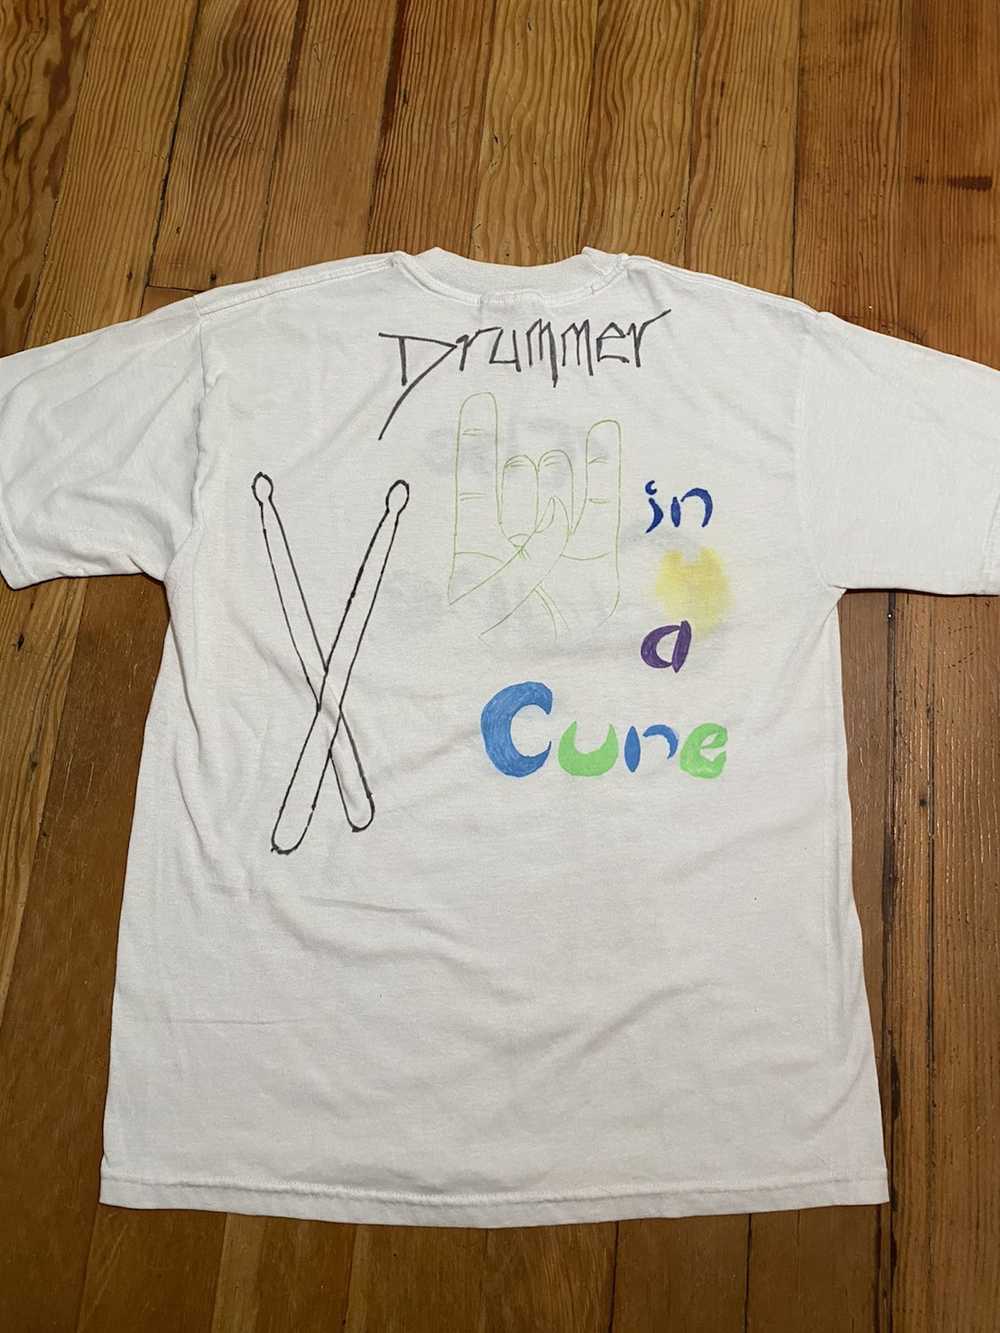 Vintage Vintage The cure the cure T shirt - image 2